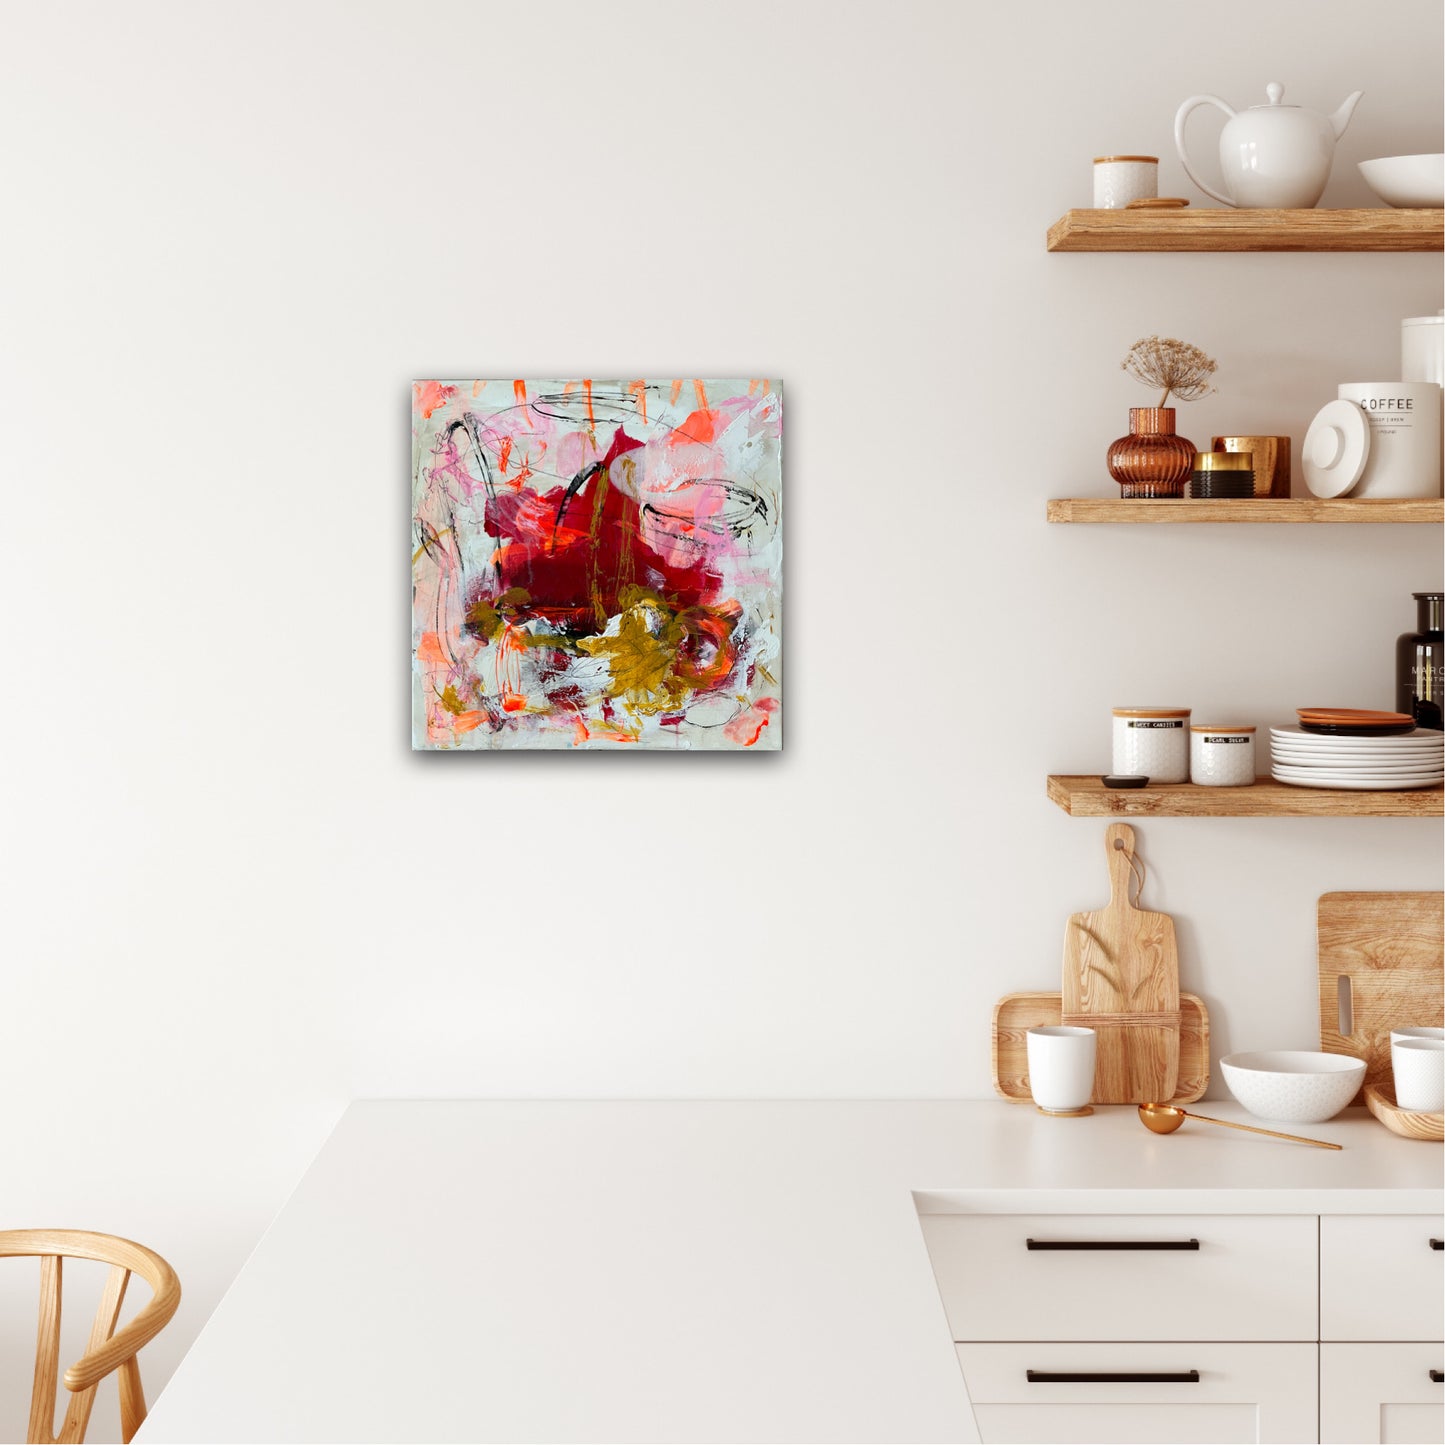 Abstrakt maleri, 40x40 cm, "Livsglæde" by Lone Reedtz , Abstrakt ekspressivt akrylmaleri på lærred Black Ochre Orange Pink Red Square White